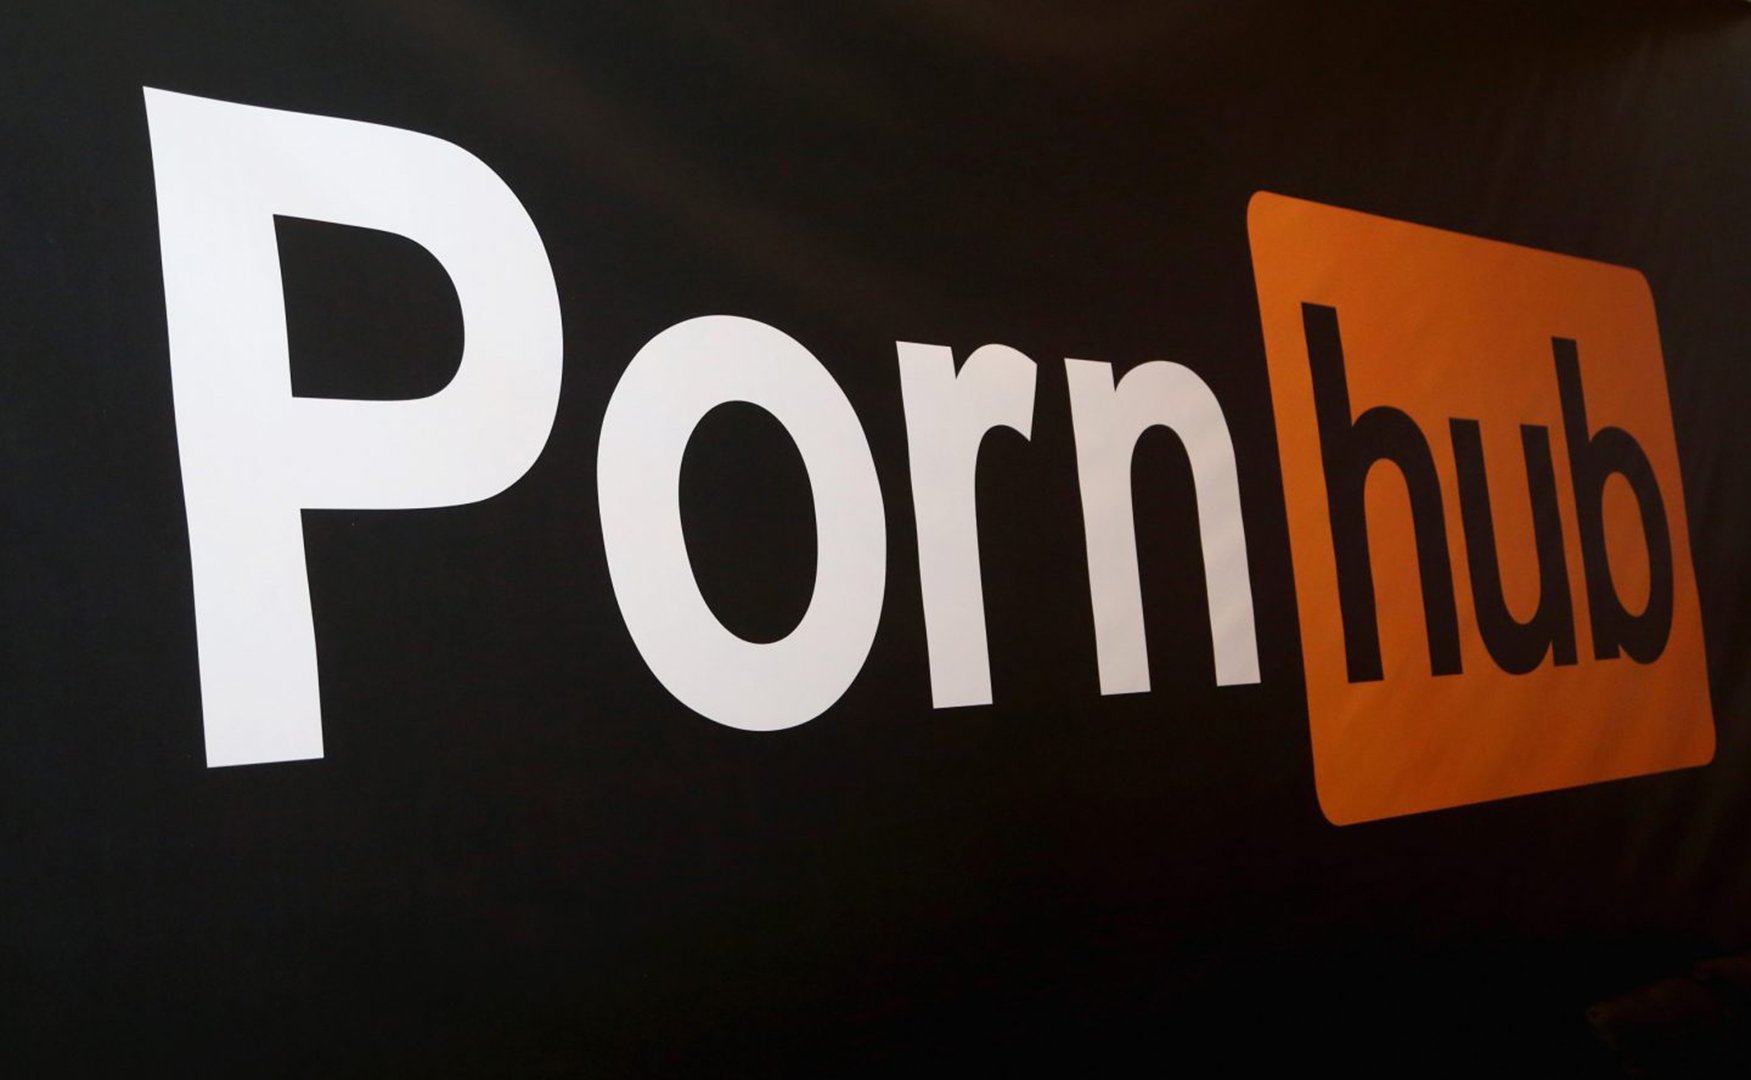 Pornhub Amateur Program: How Much Money Can I Make on Pornhub?